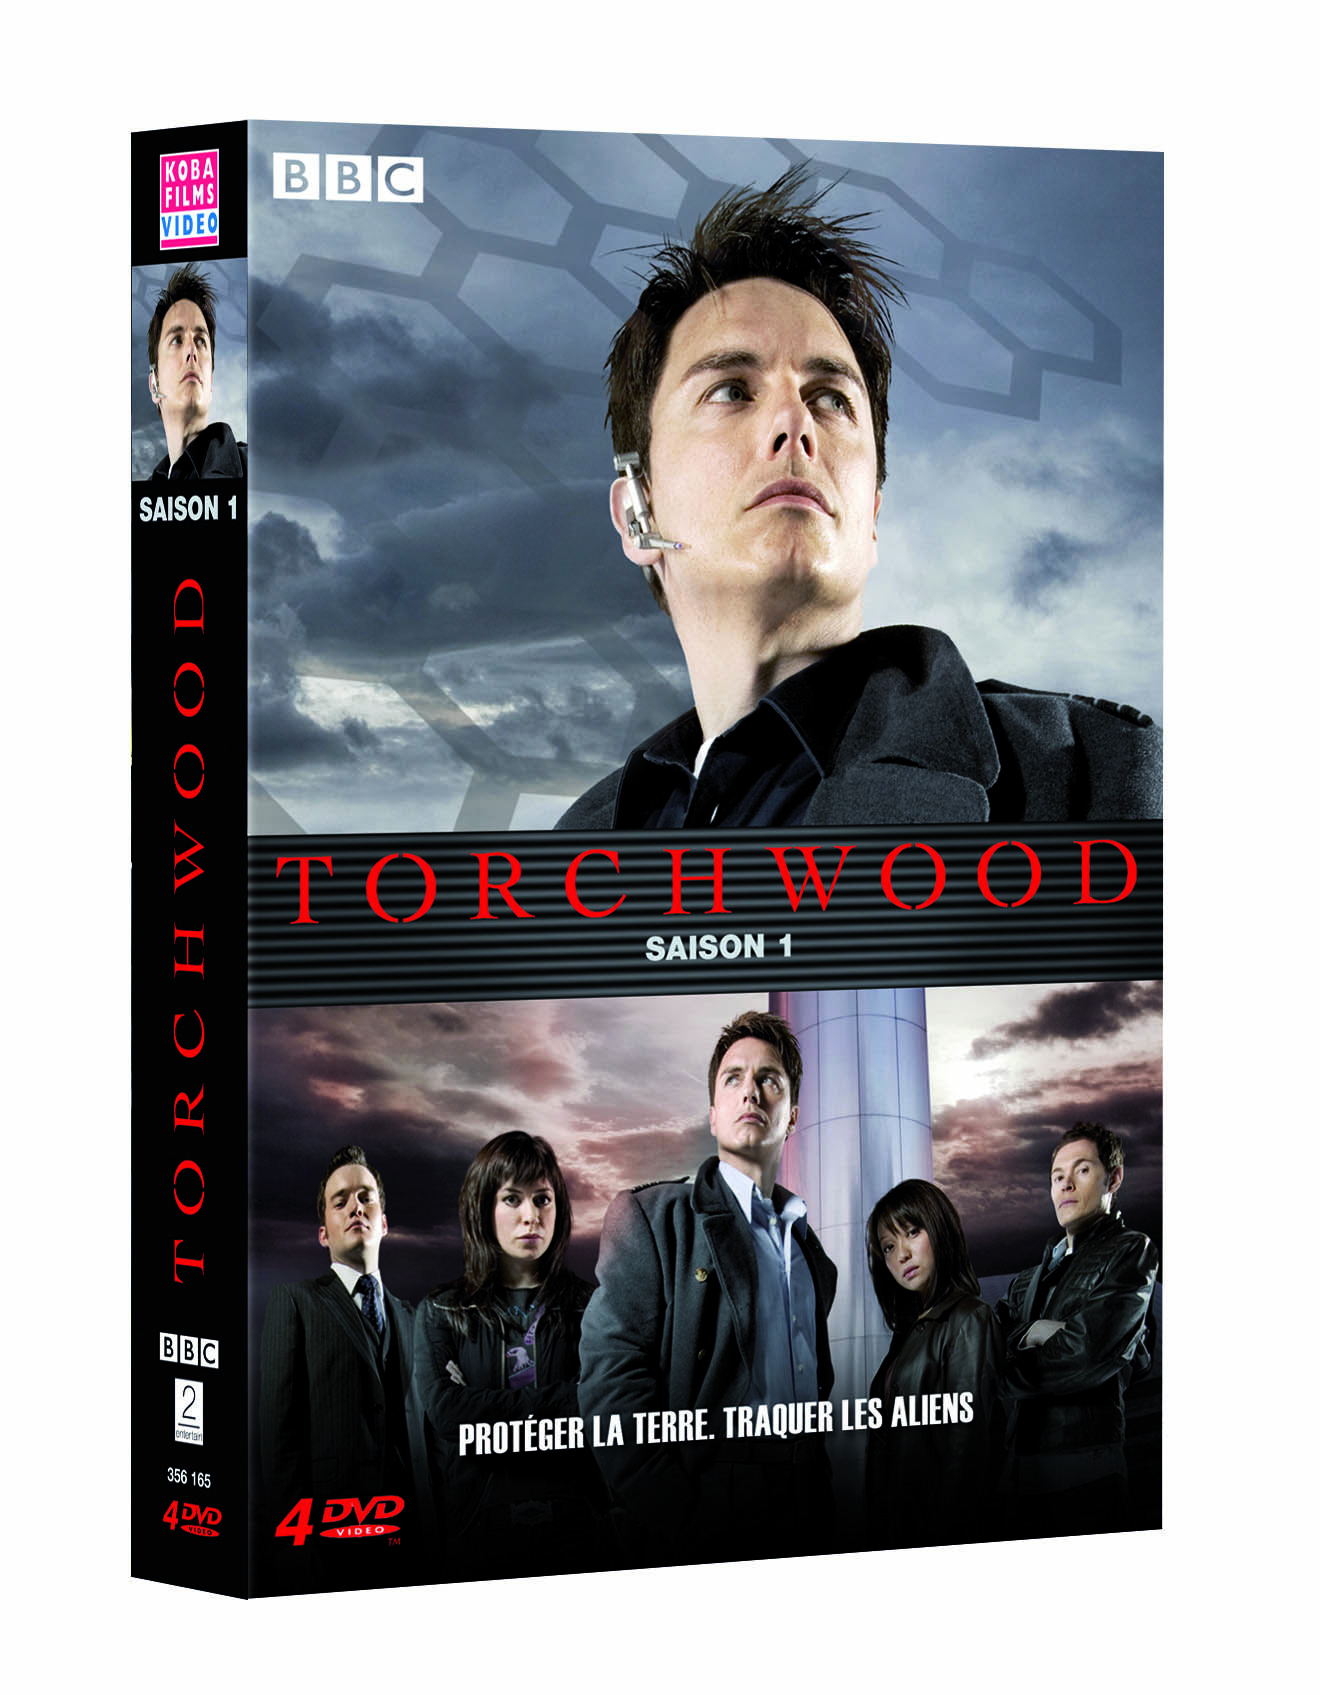 TORCHWOOD - SAISON 1 (4 DVD)